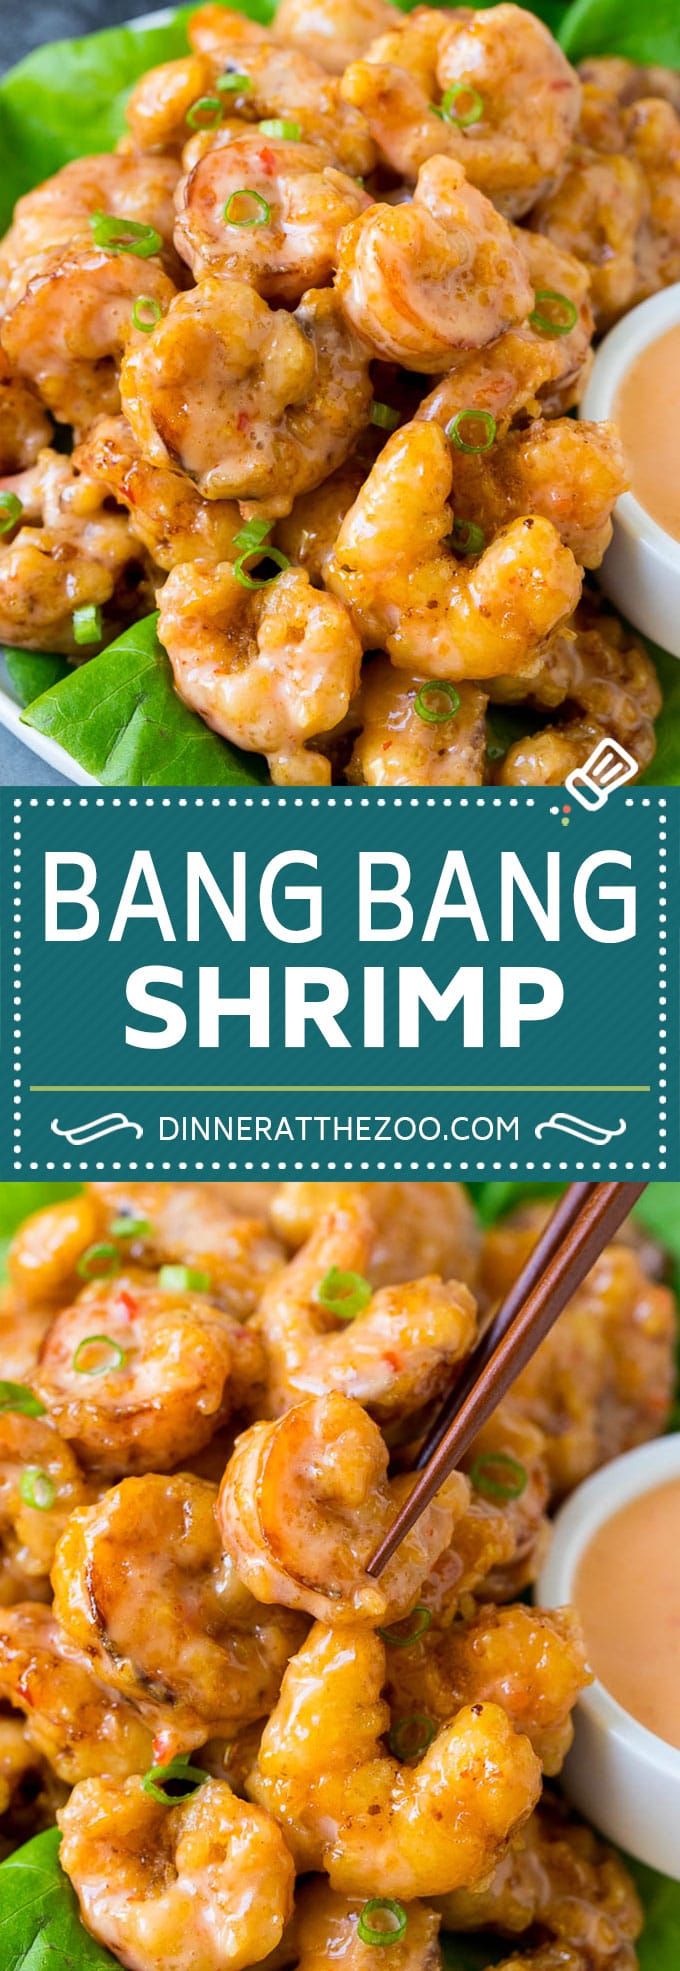 Bang Bang Shrimp Recipe | Fried Shrimp #shrimp #appetizer #dinner #dinneratthezoo #copycatrecipe